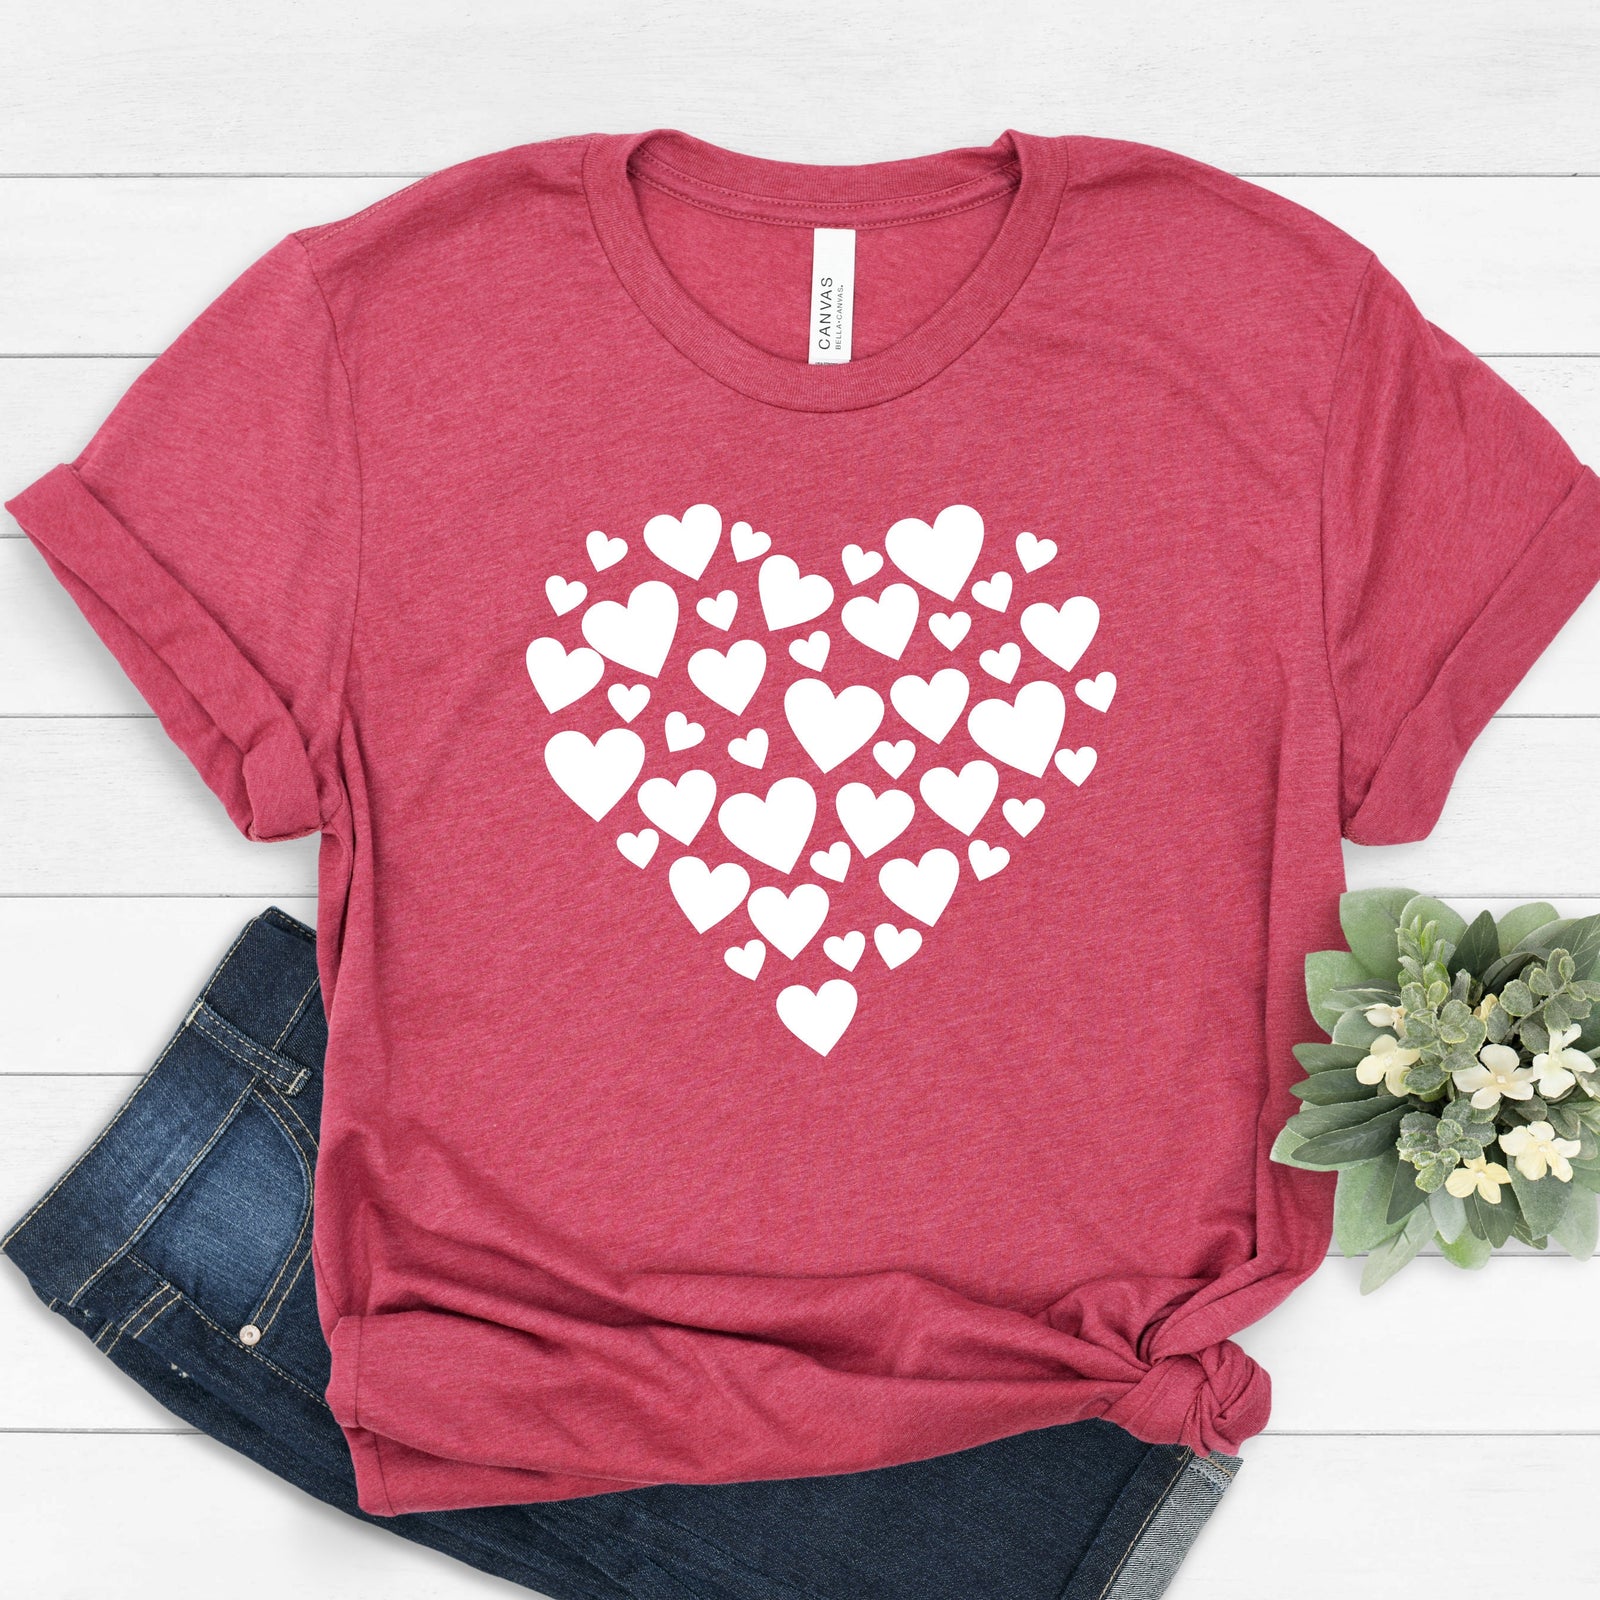 Hearts in Heart Shape T Shirt - Unisex Adult Valentine's Day Heart Shirt - Valentines Day Gift